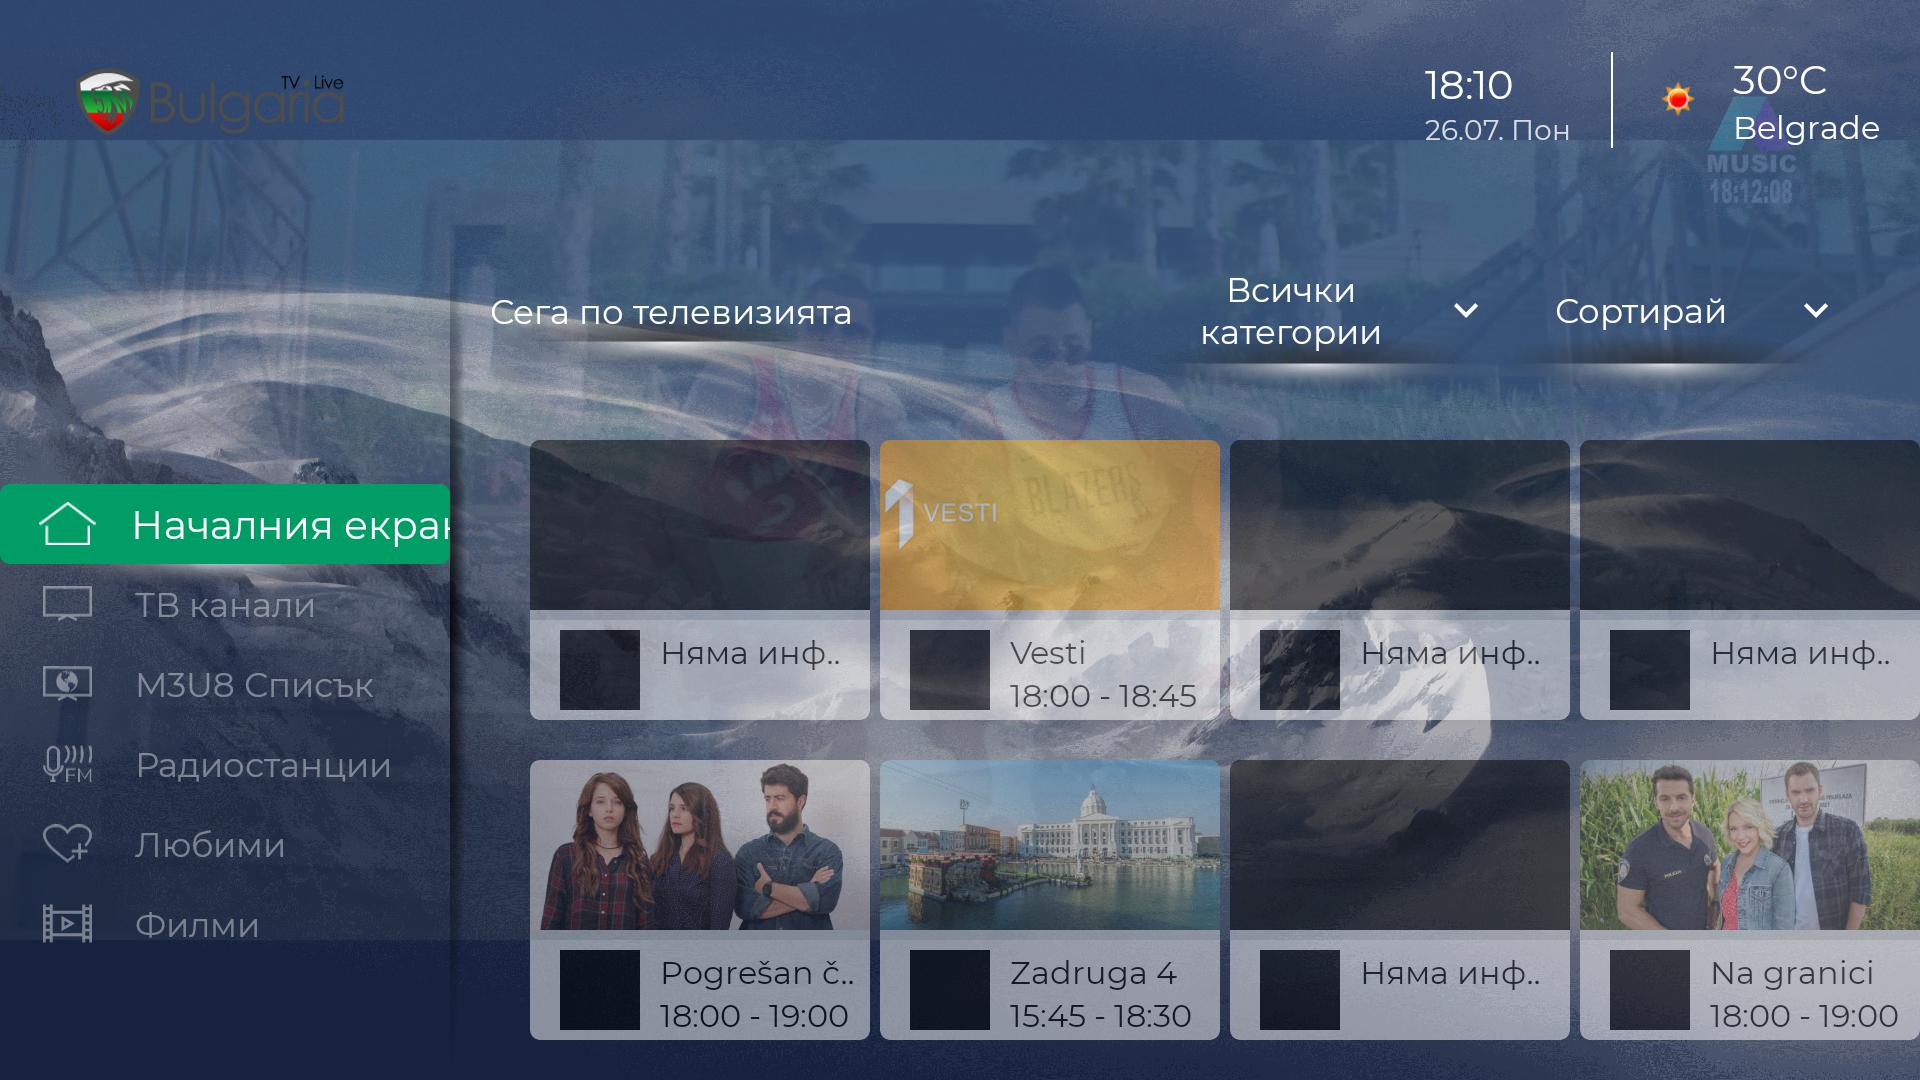 Bulgaria Live 1.2.04 Screenshot 17